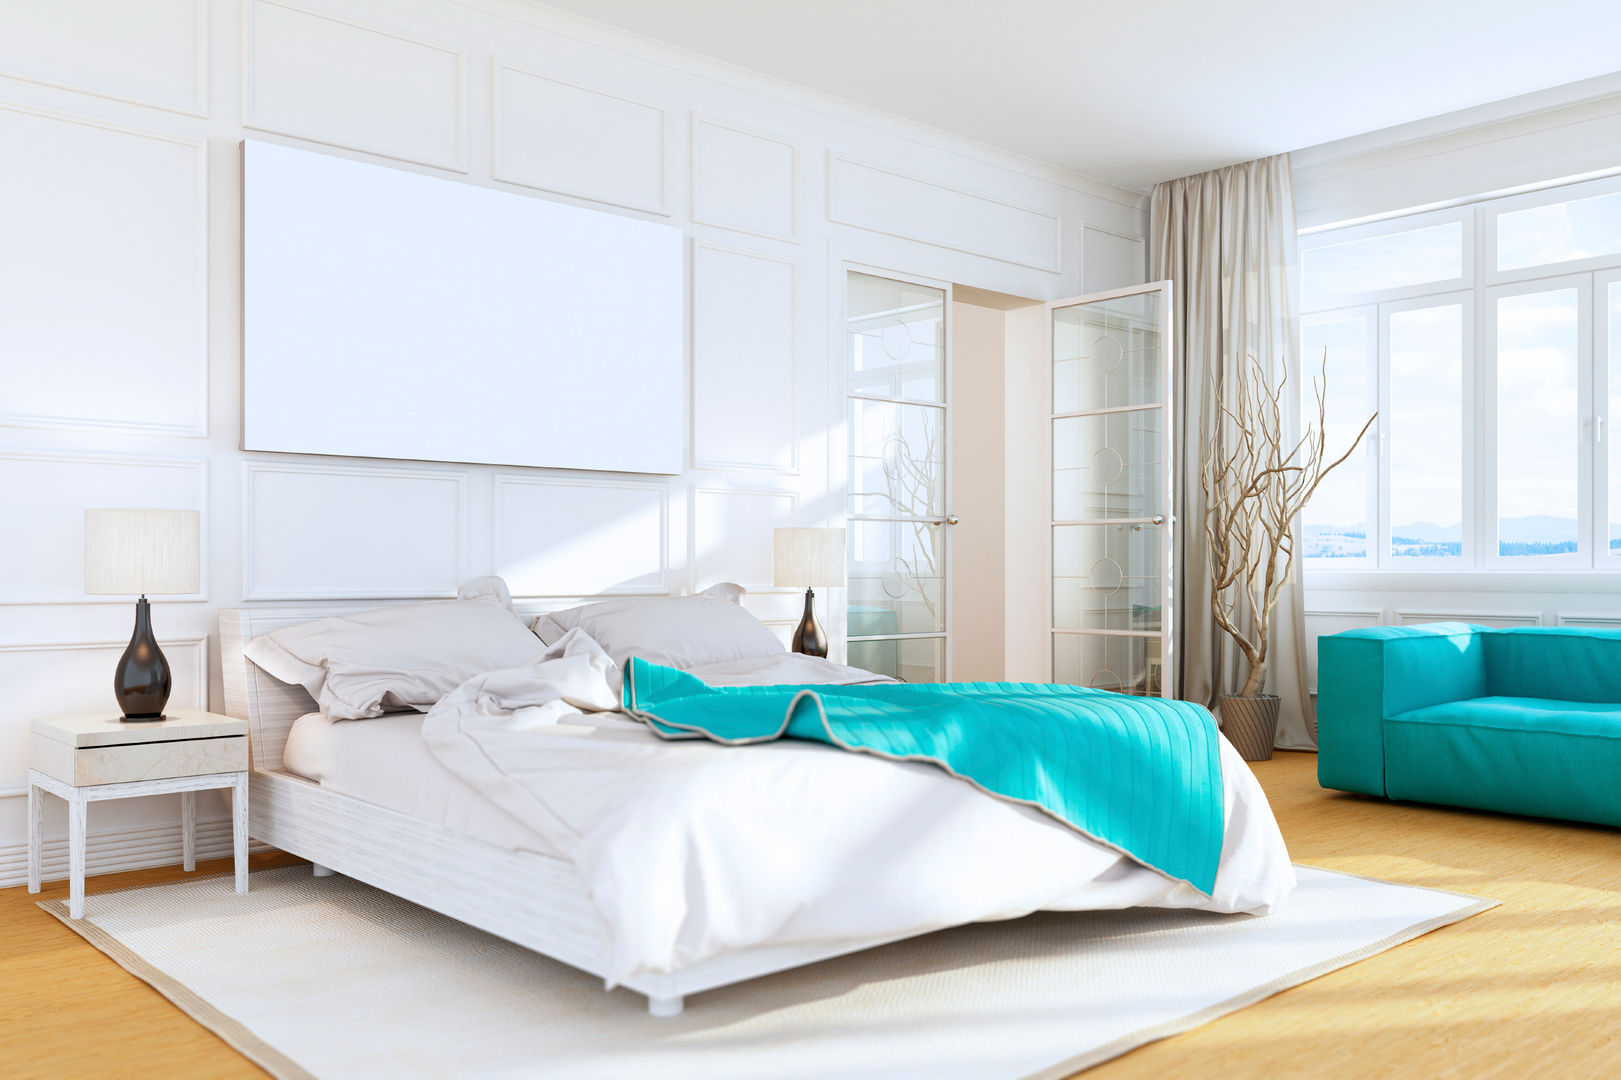 Beach House Bedroom Gracious Luxury Interiors Dormitorios de estilo minimalista Torquoise,Blue,beach house,White,Bright,Pastel,Minimal,Pop of Color